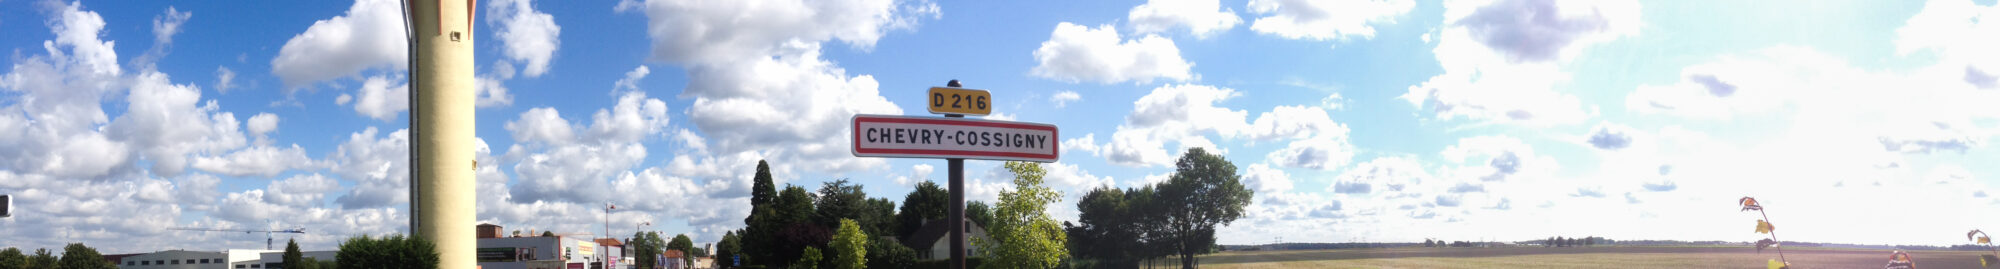 panorama Chevry-Cossigny